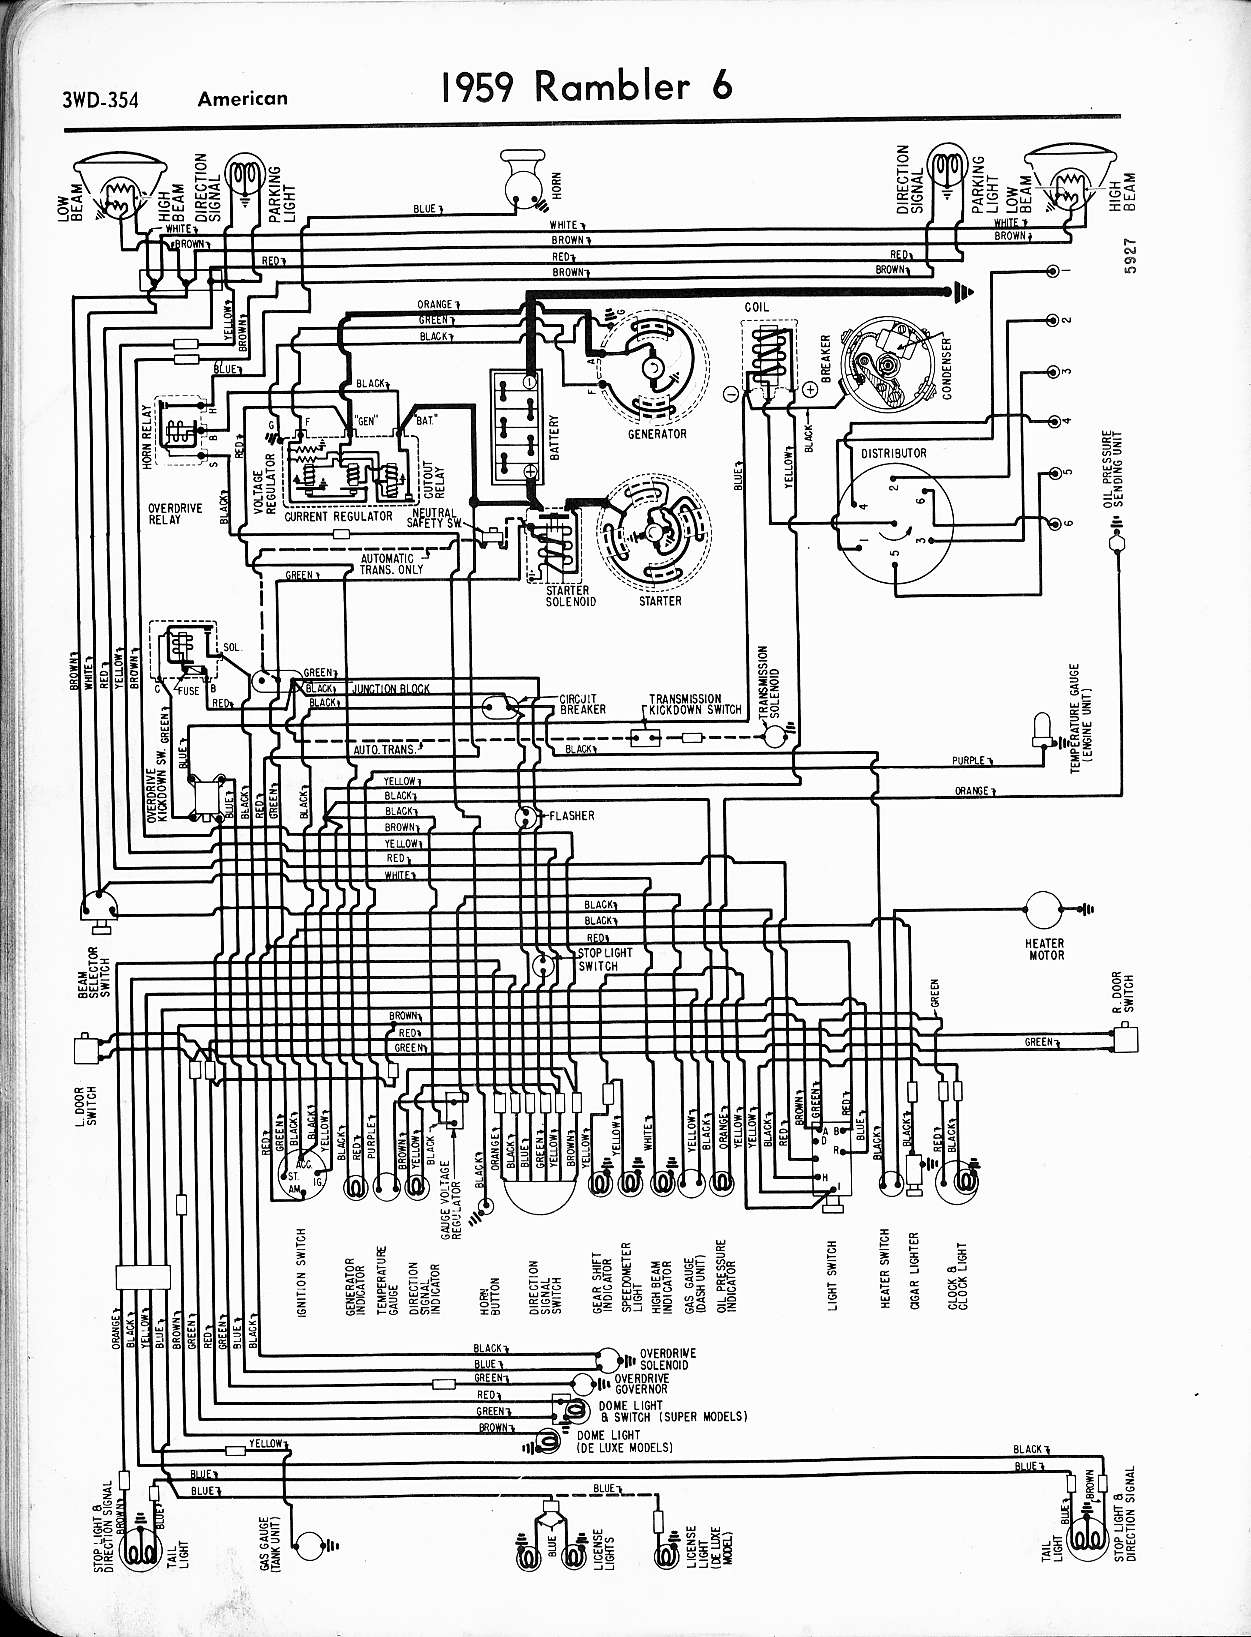 Rambler Wiring Diagrams The Old Car